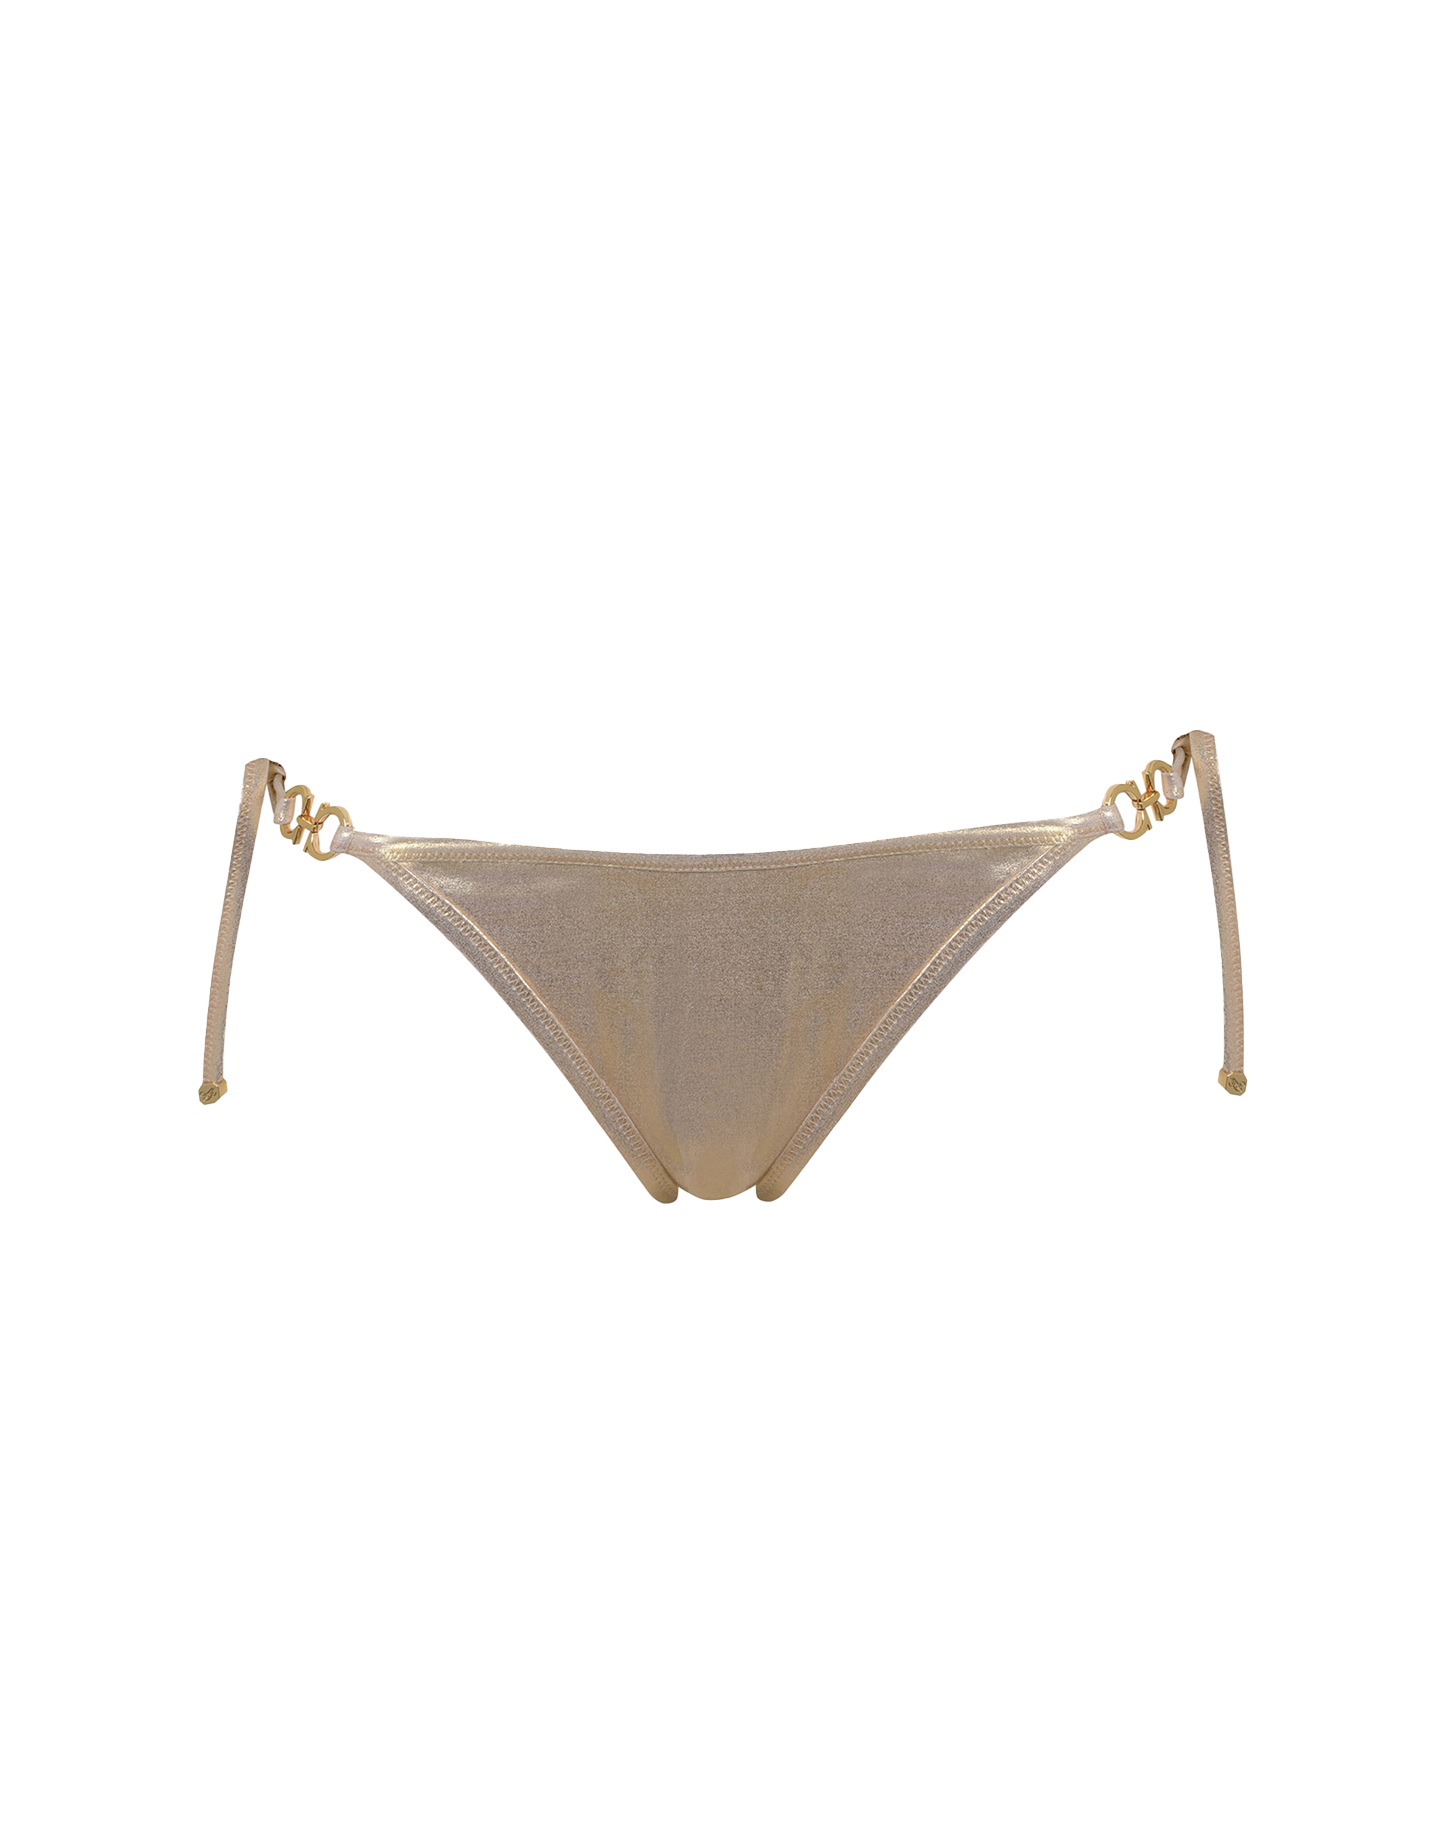 Brontie Bikini Bottom in Gold | By Agent Provocateur All Swimwear